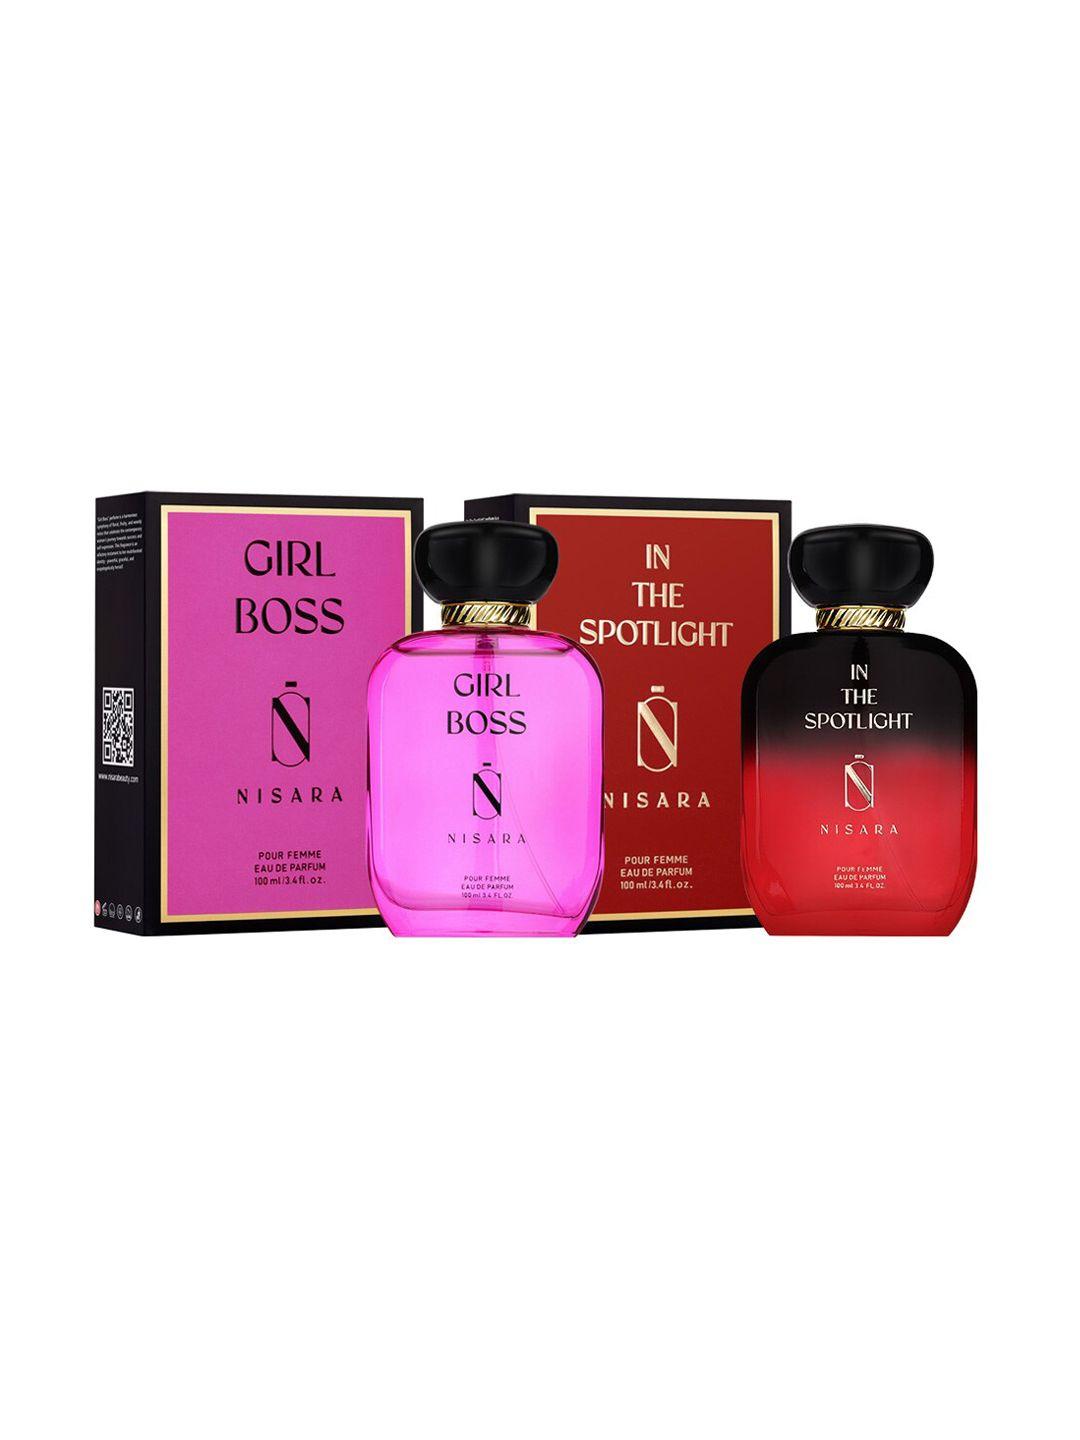 nisara set of 2 girl boss & in the spotlight eau de perfume - 100ml each